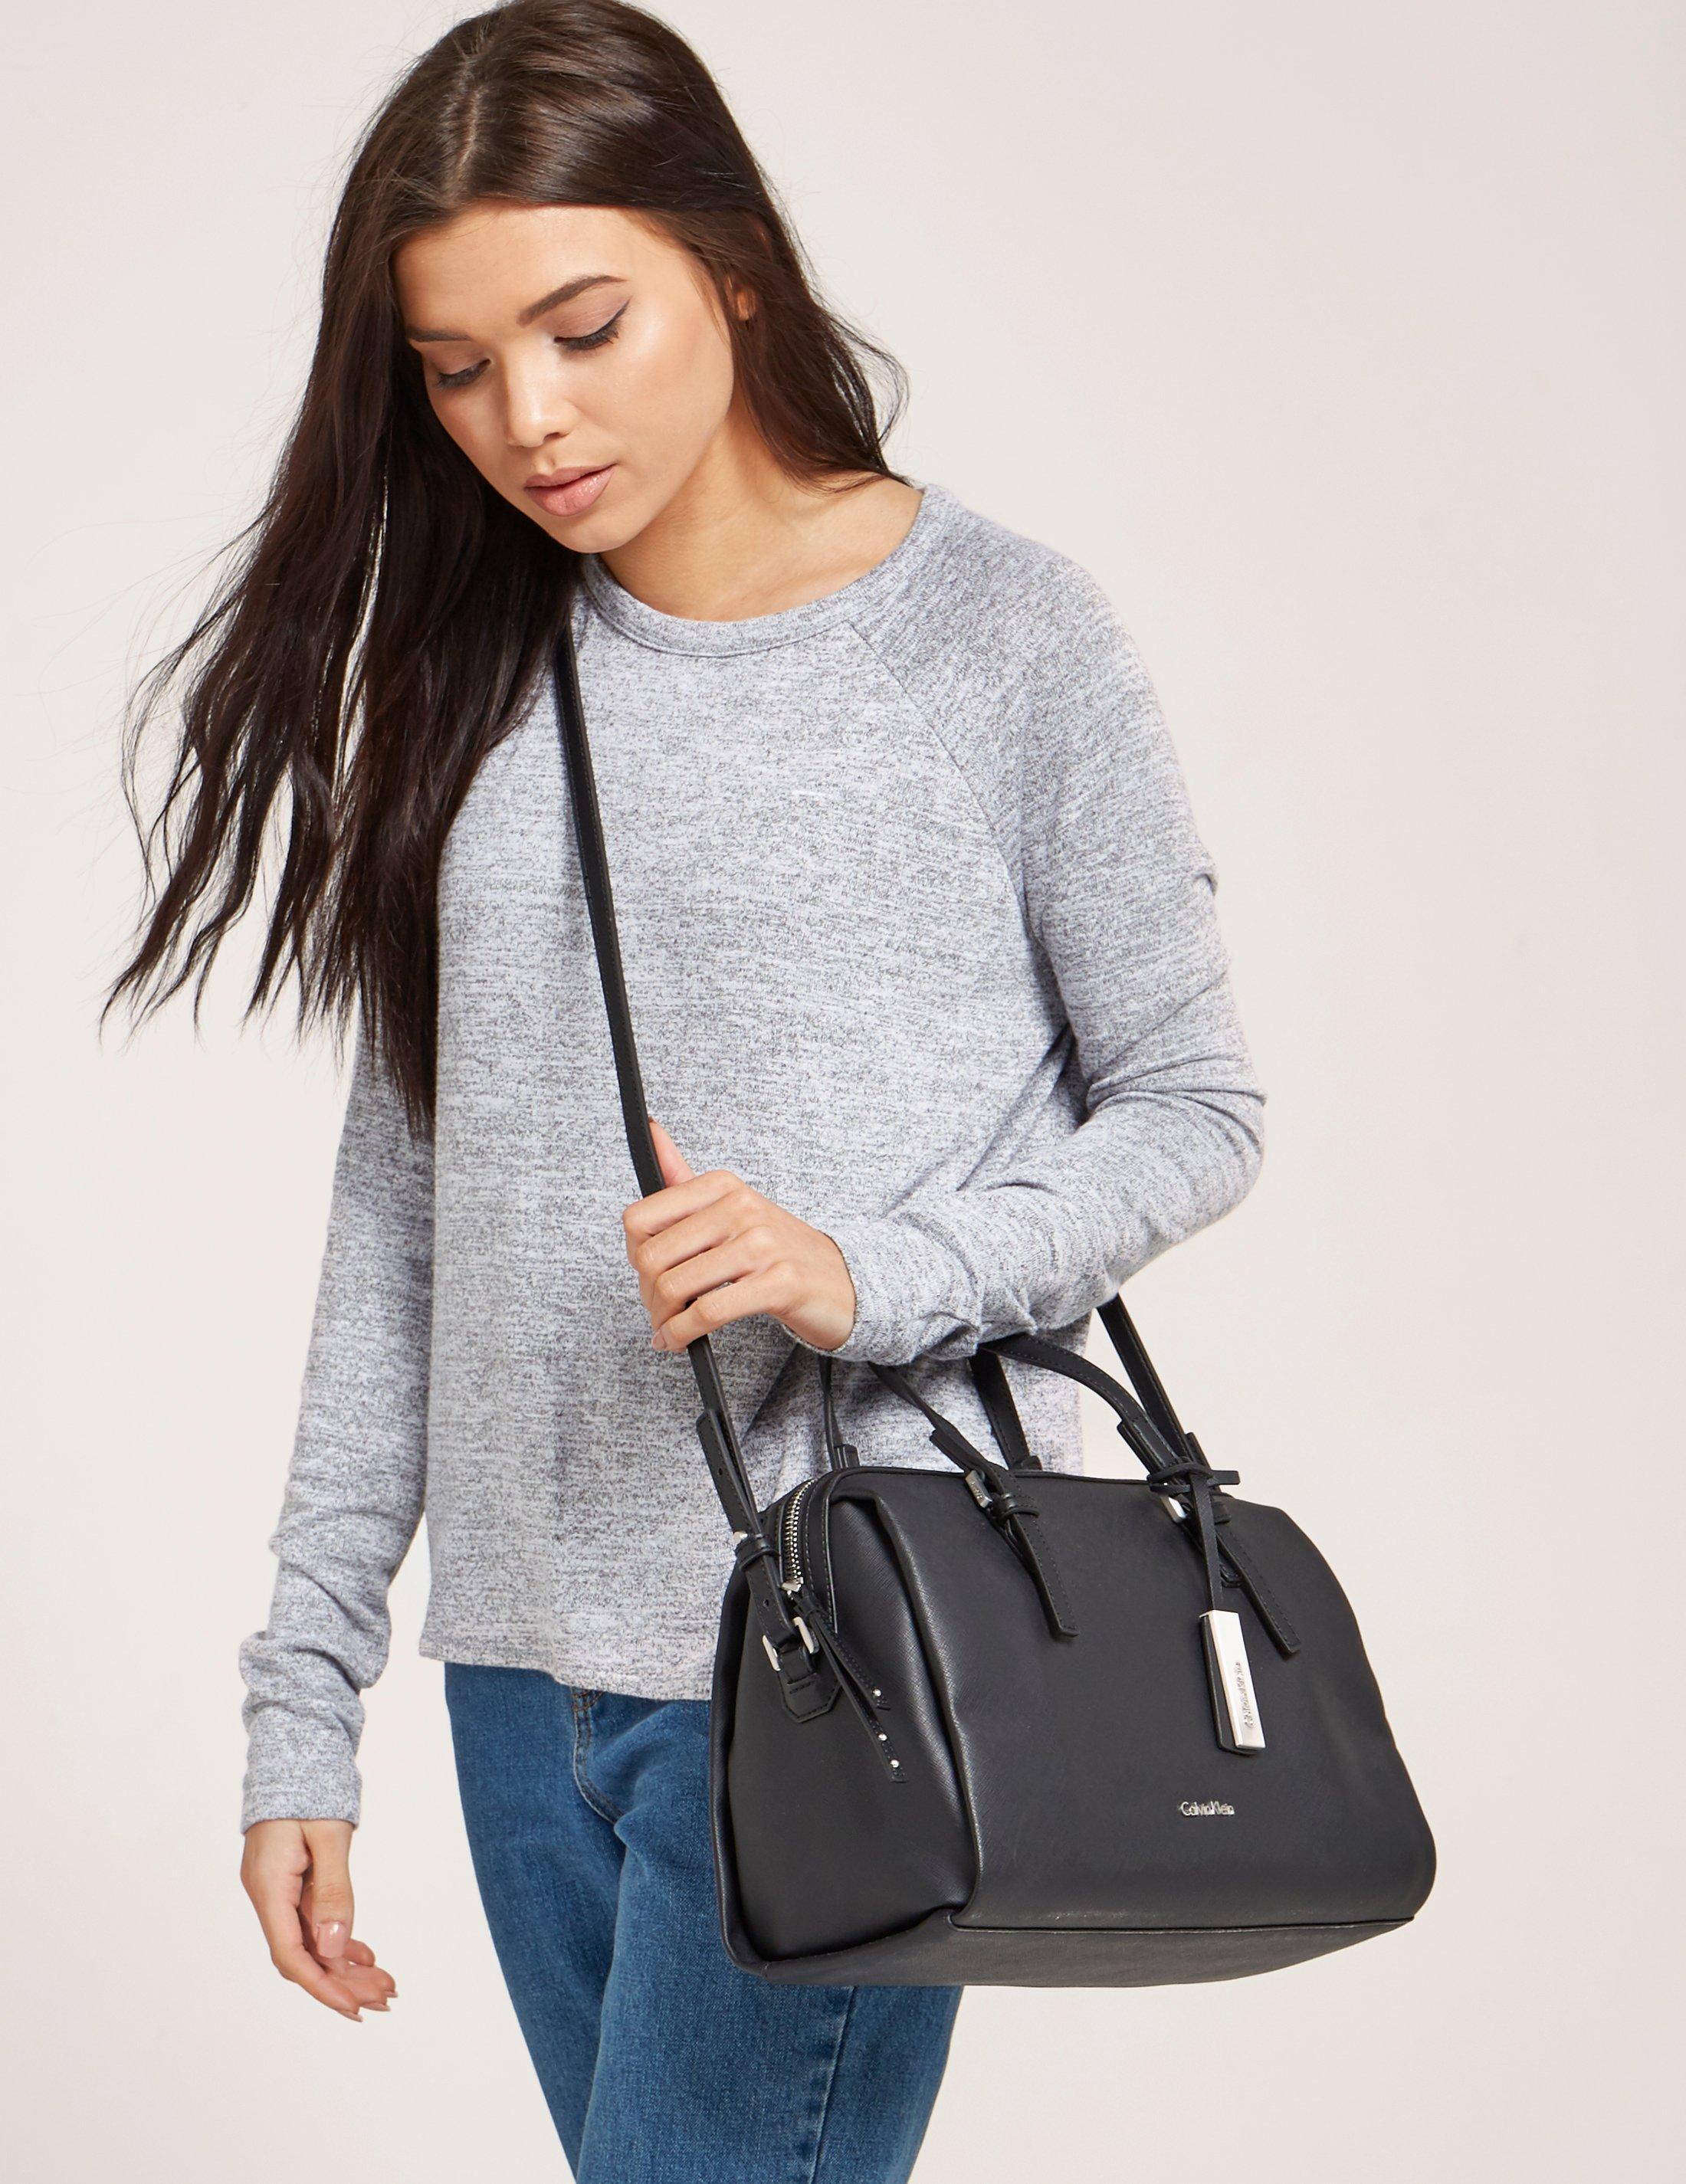 Calvin Klein Marissa Bag Deals, 54% OFF | rikk.hi.is